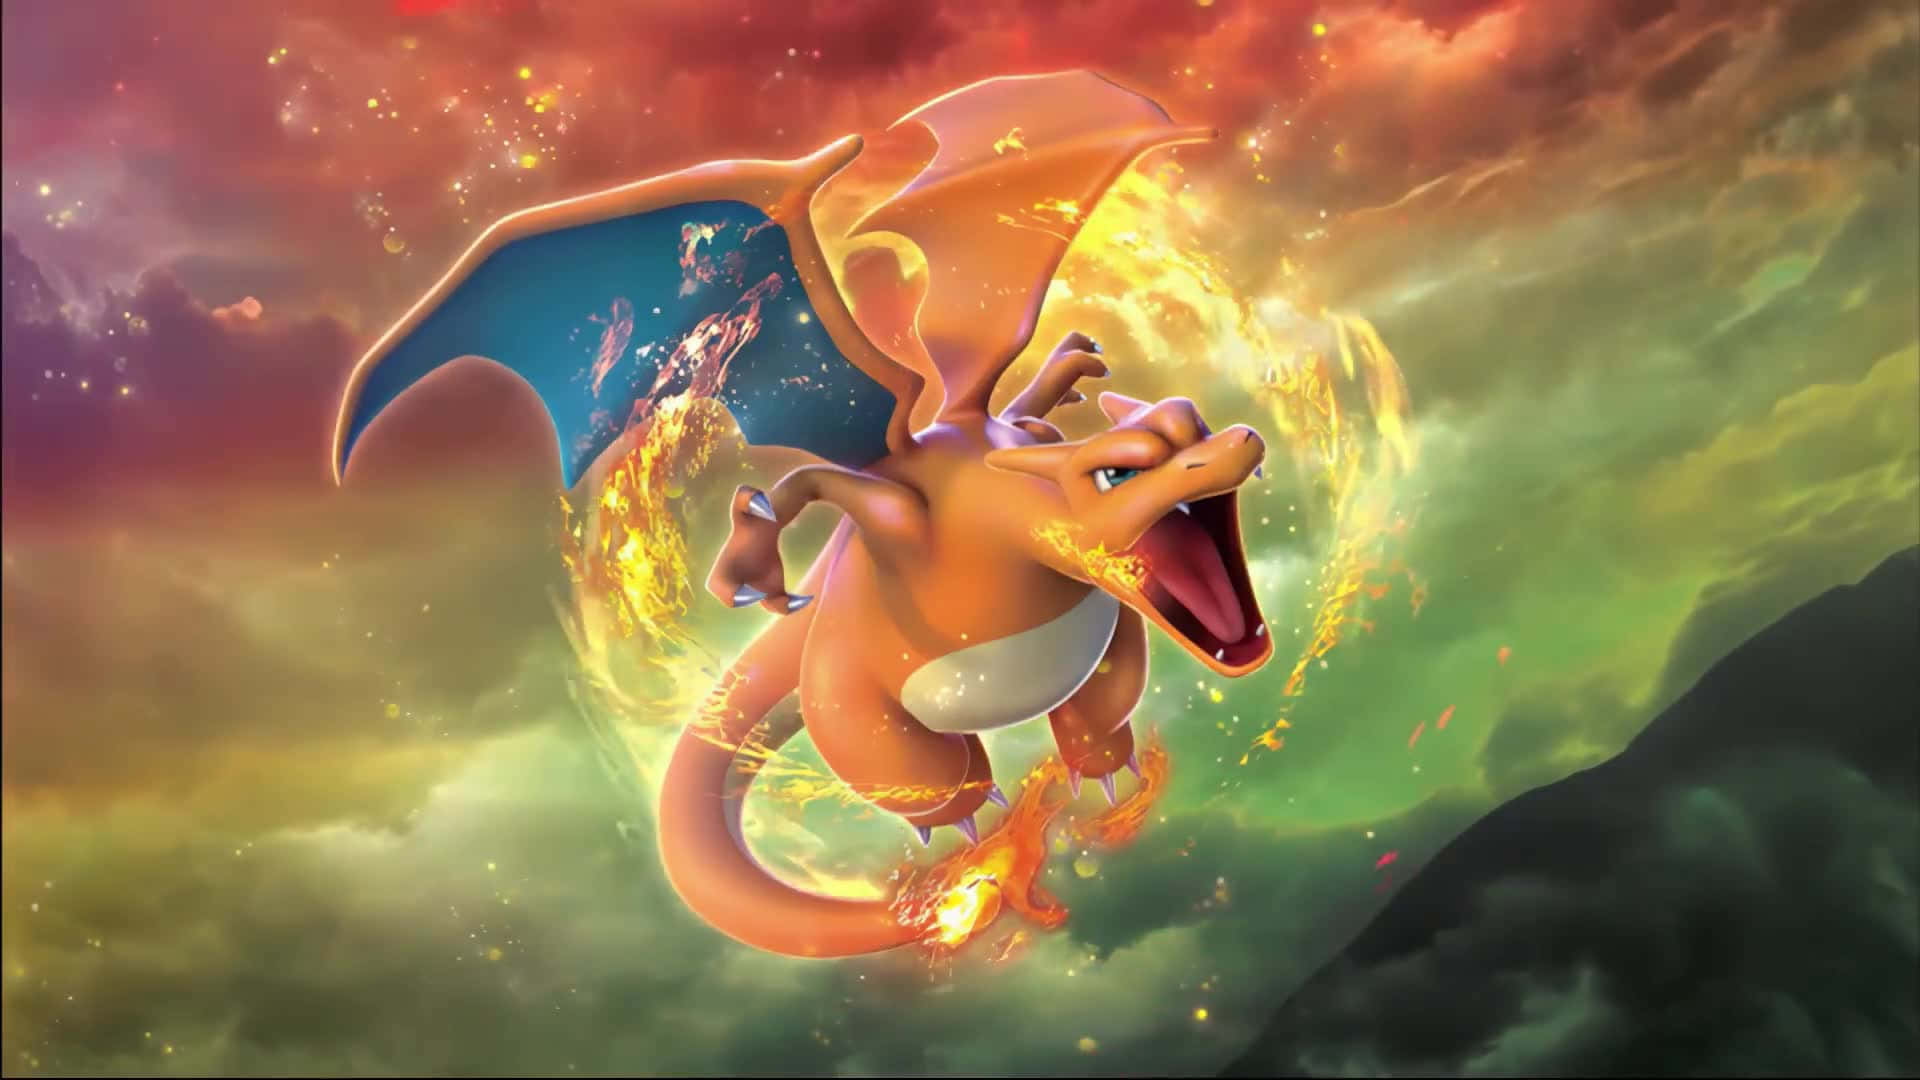 Charizarddas Mächtige Feueratmende Pokémon. Wallpaper